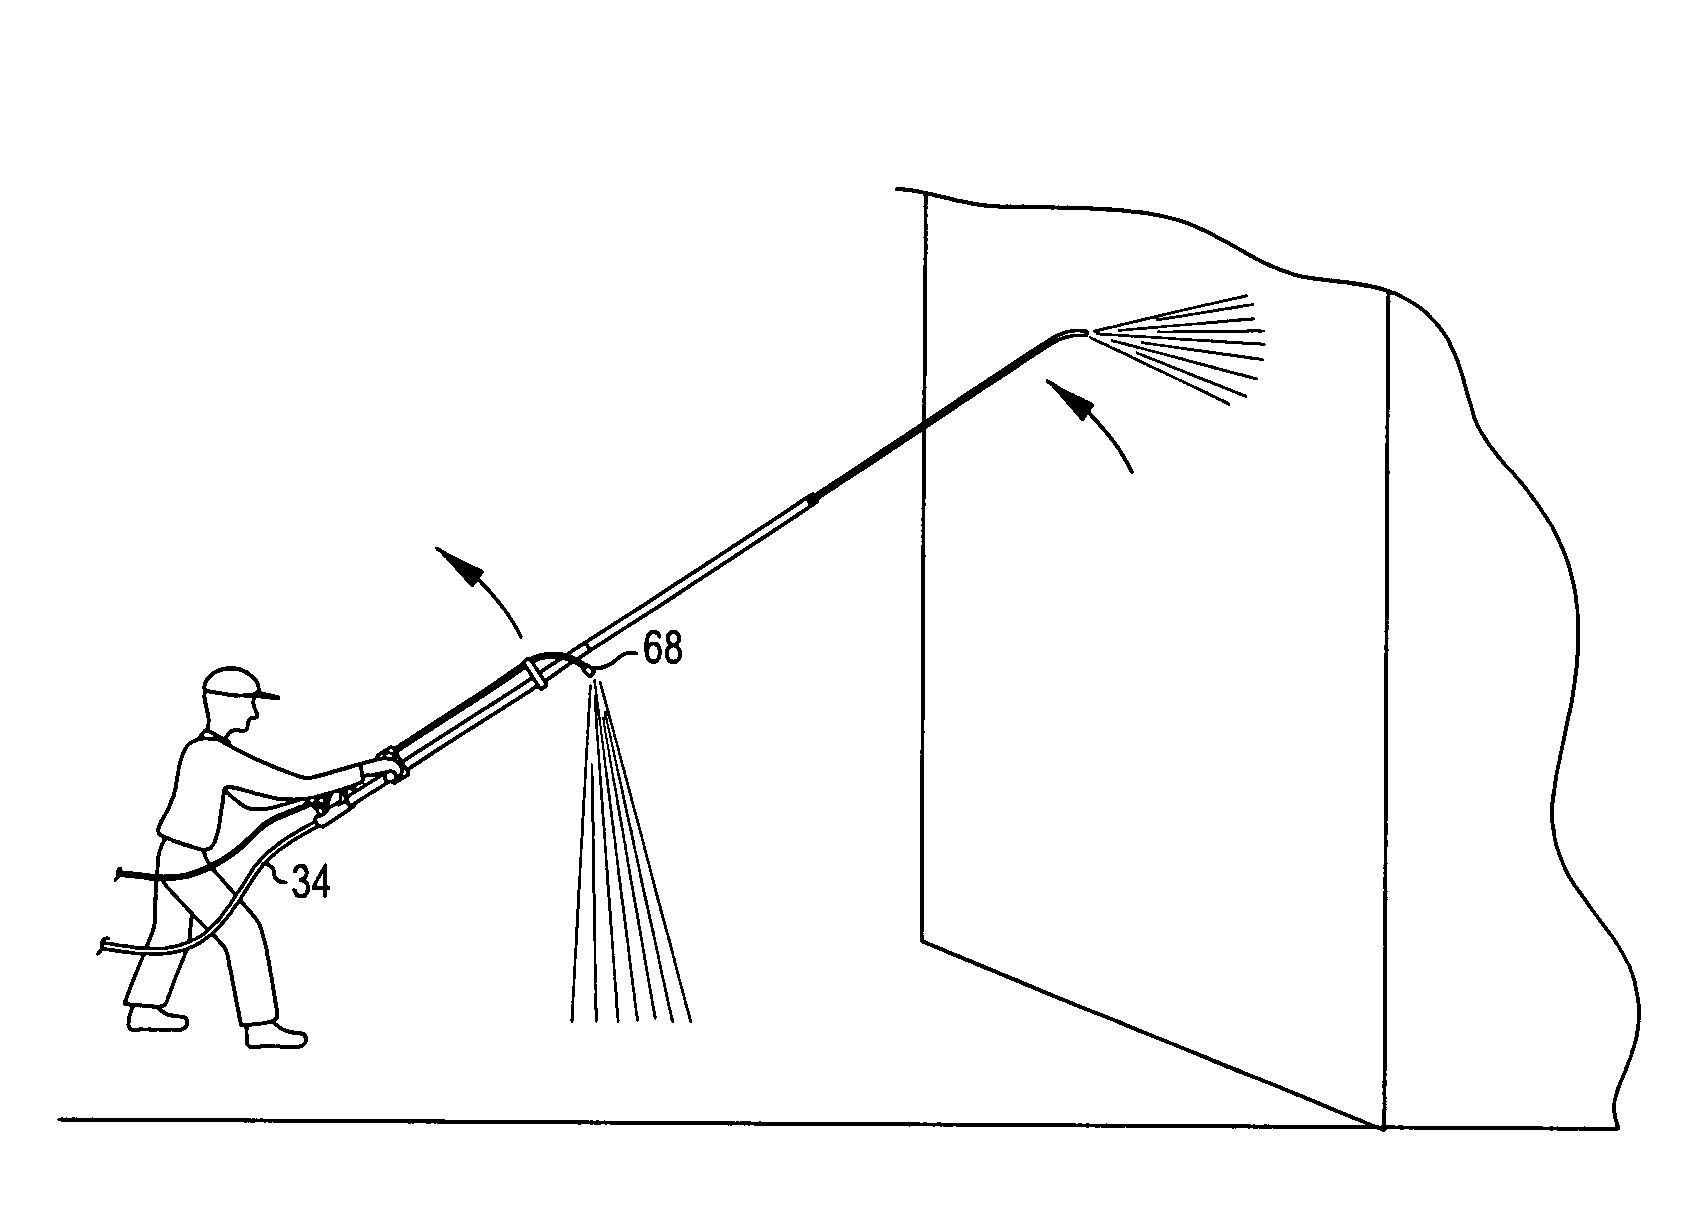 Variable reactive force arrangement for pole mounted, pressure washing lances